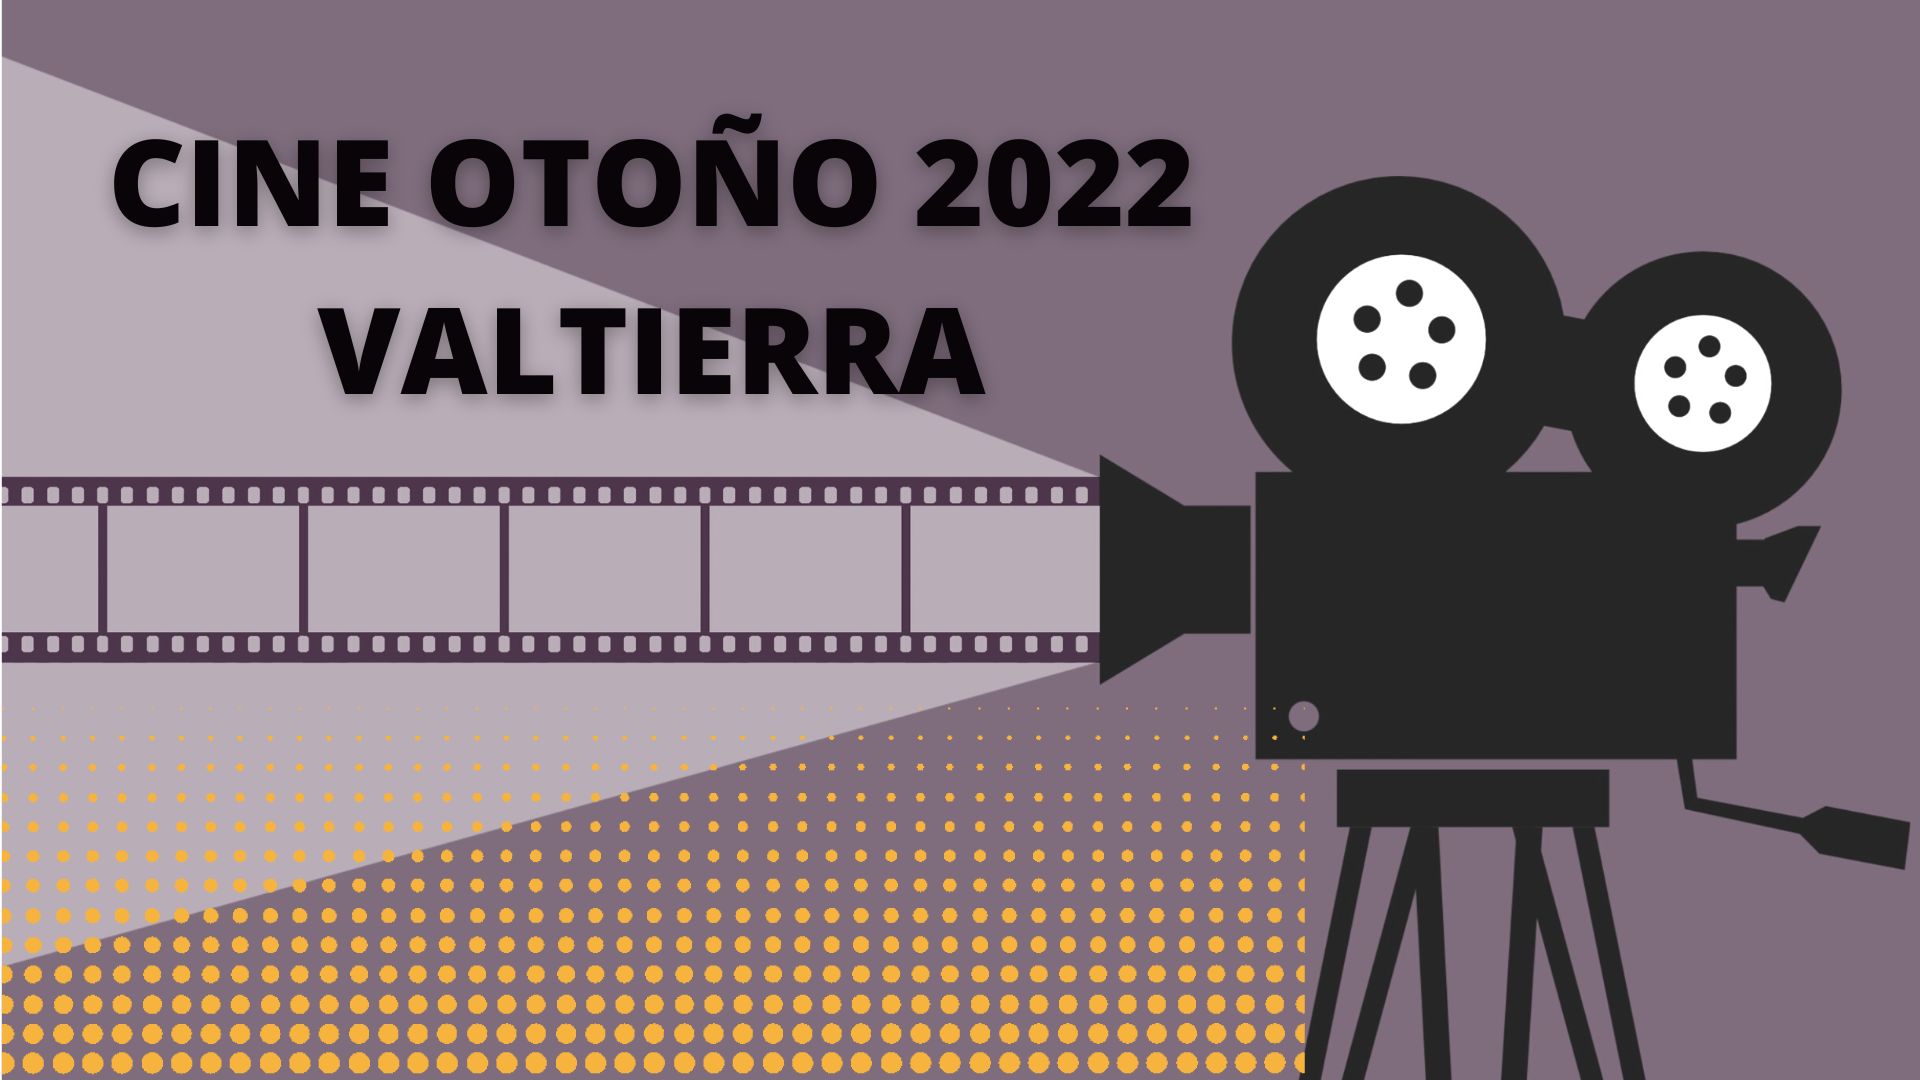 Cine otoño 2022 en Valtierra